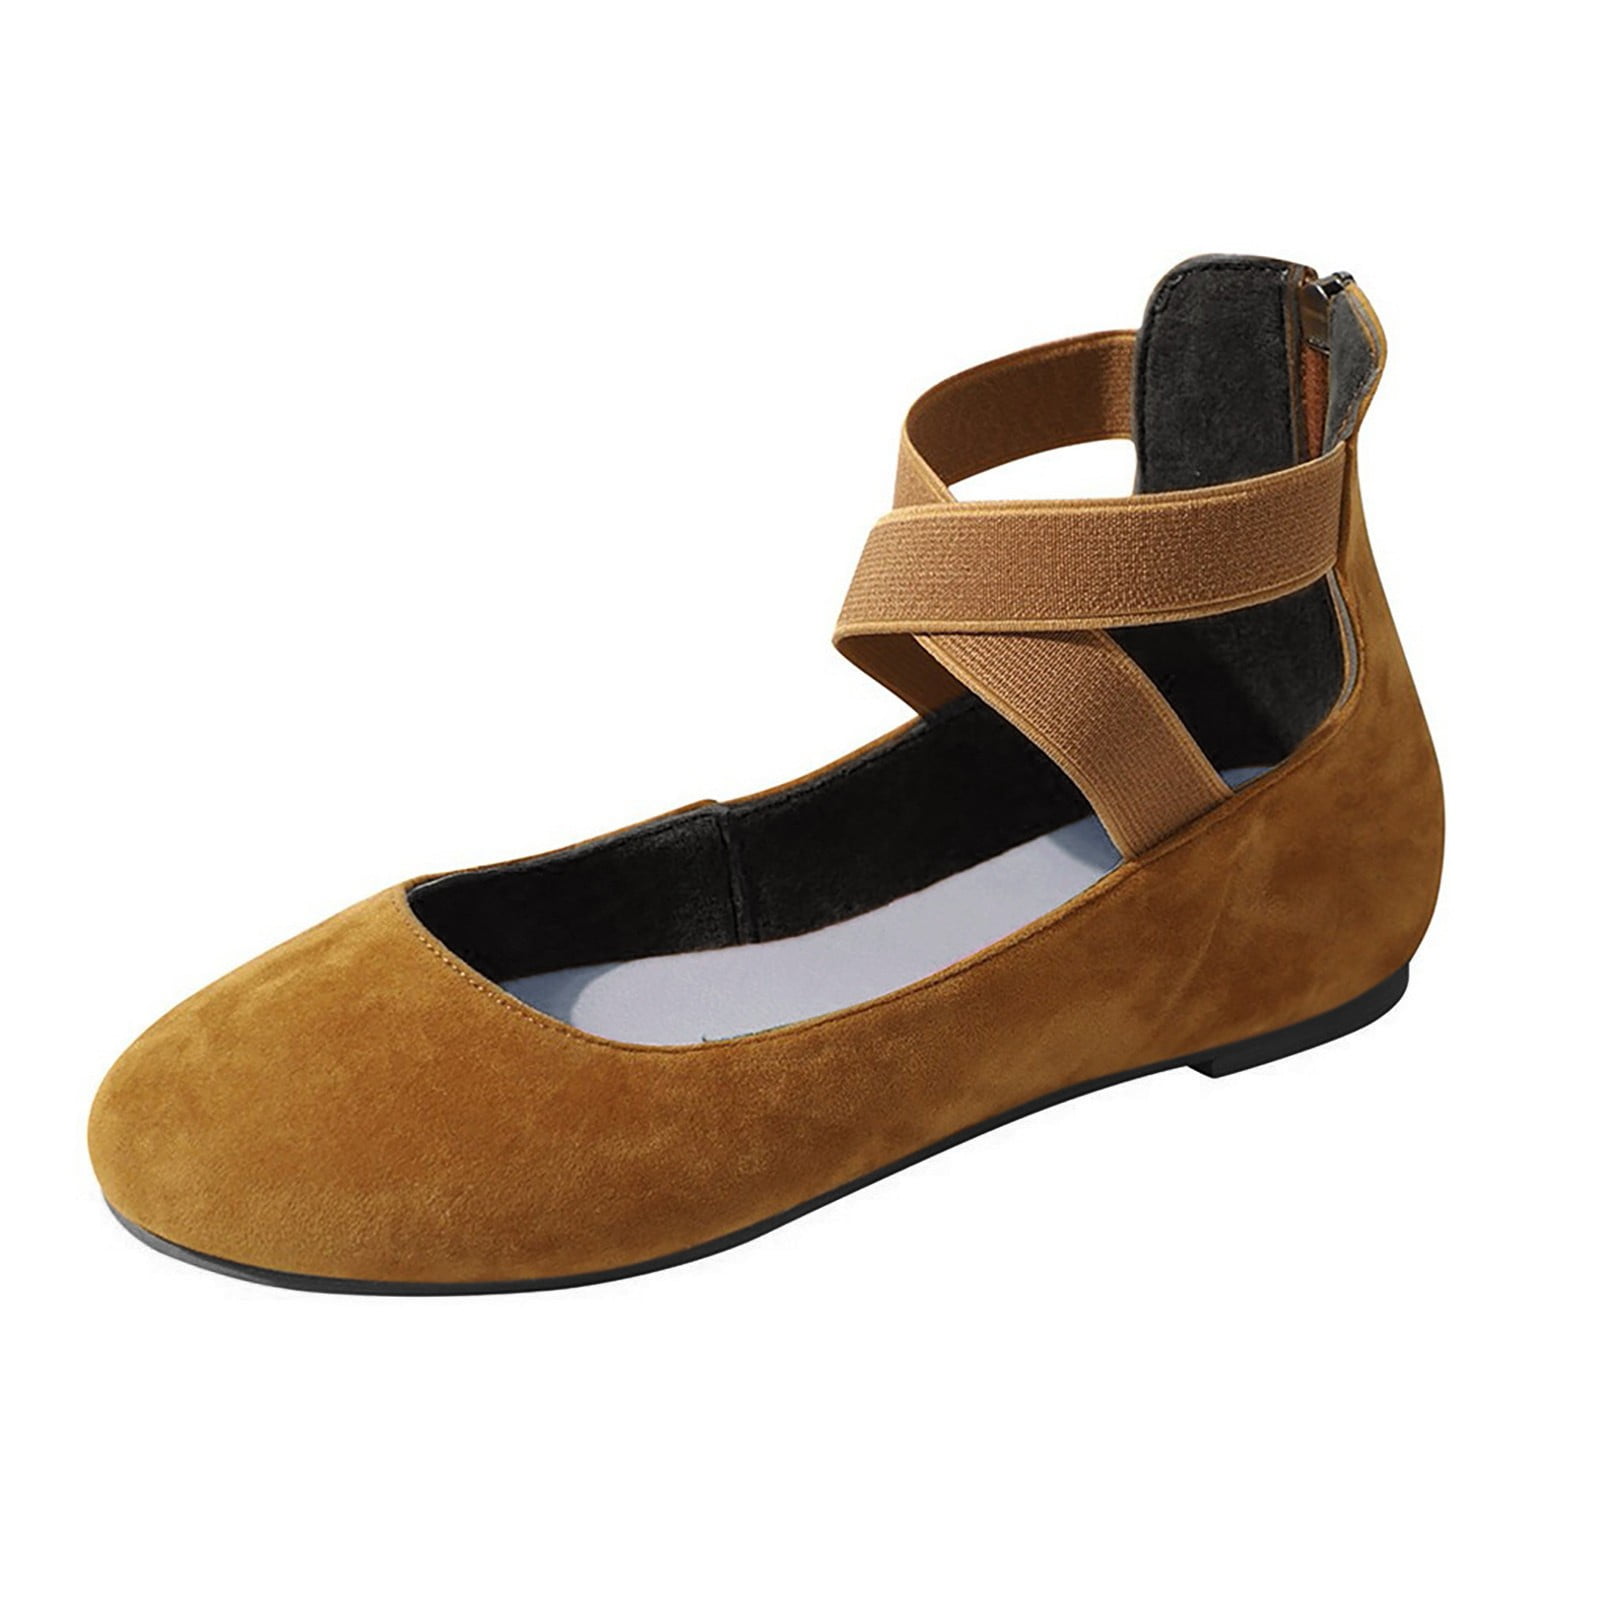 AOMPMSDX Sandals Women Comfortable Fashion Causal Singles Shoes Elastic ...